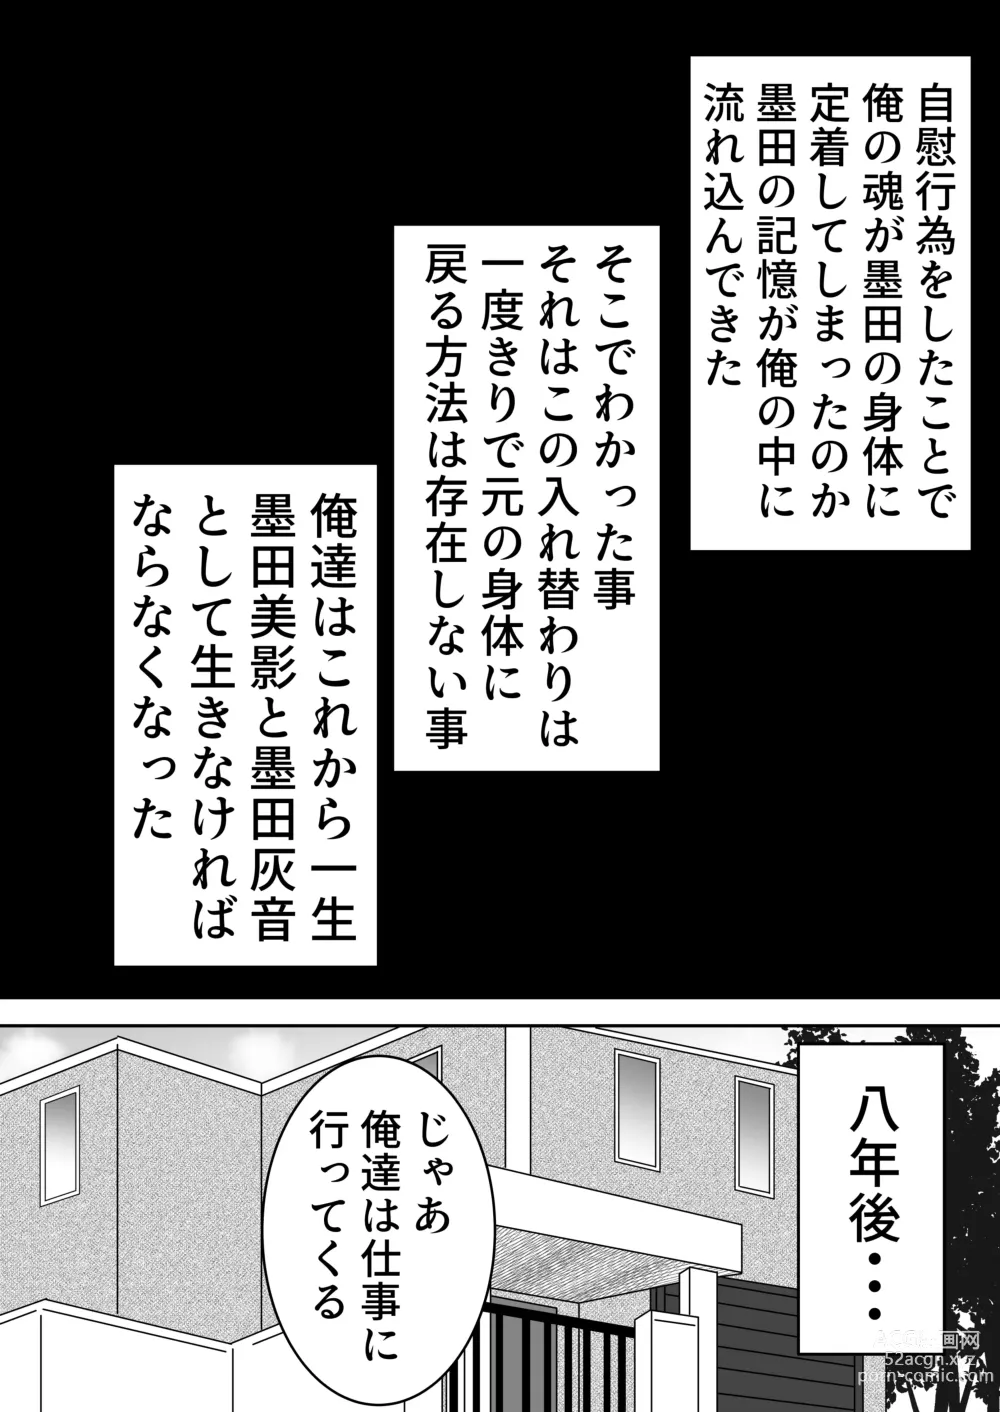 Page 39 of doujinshi Kanawanakatta  Ryouomoi